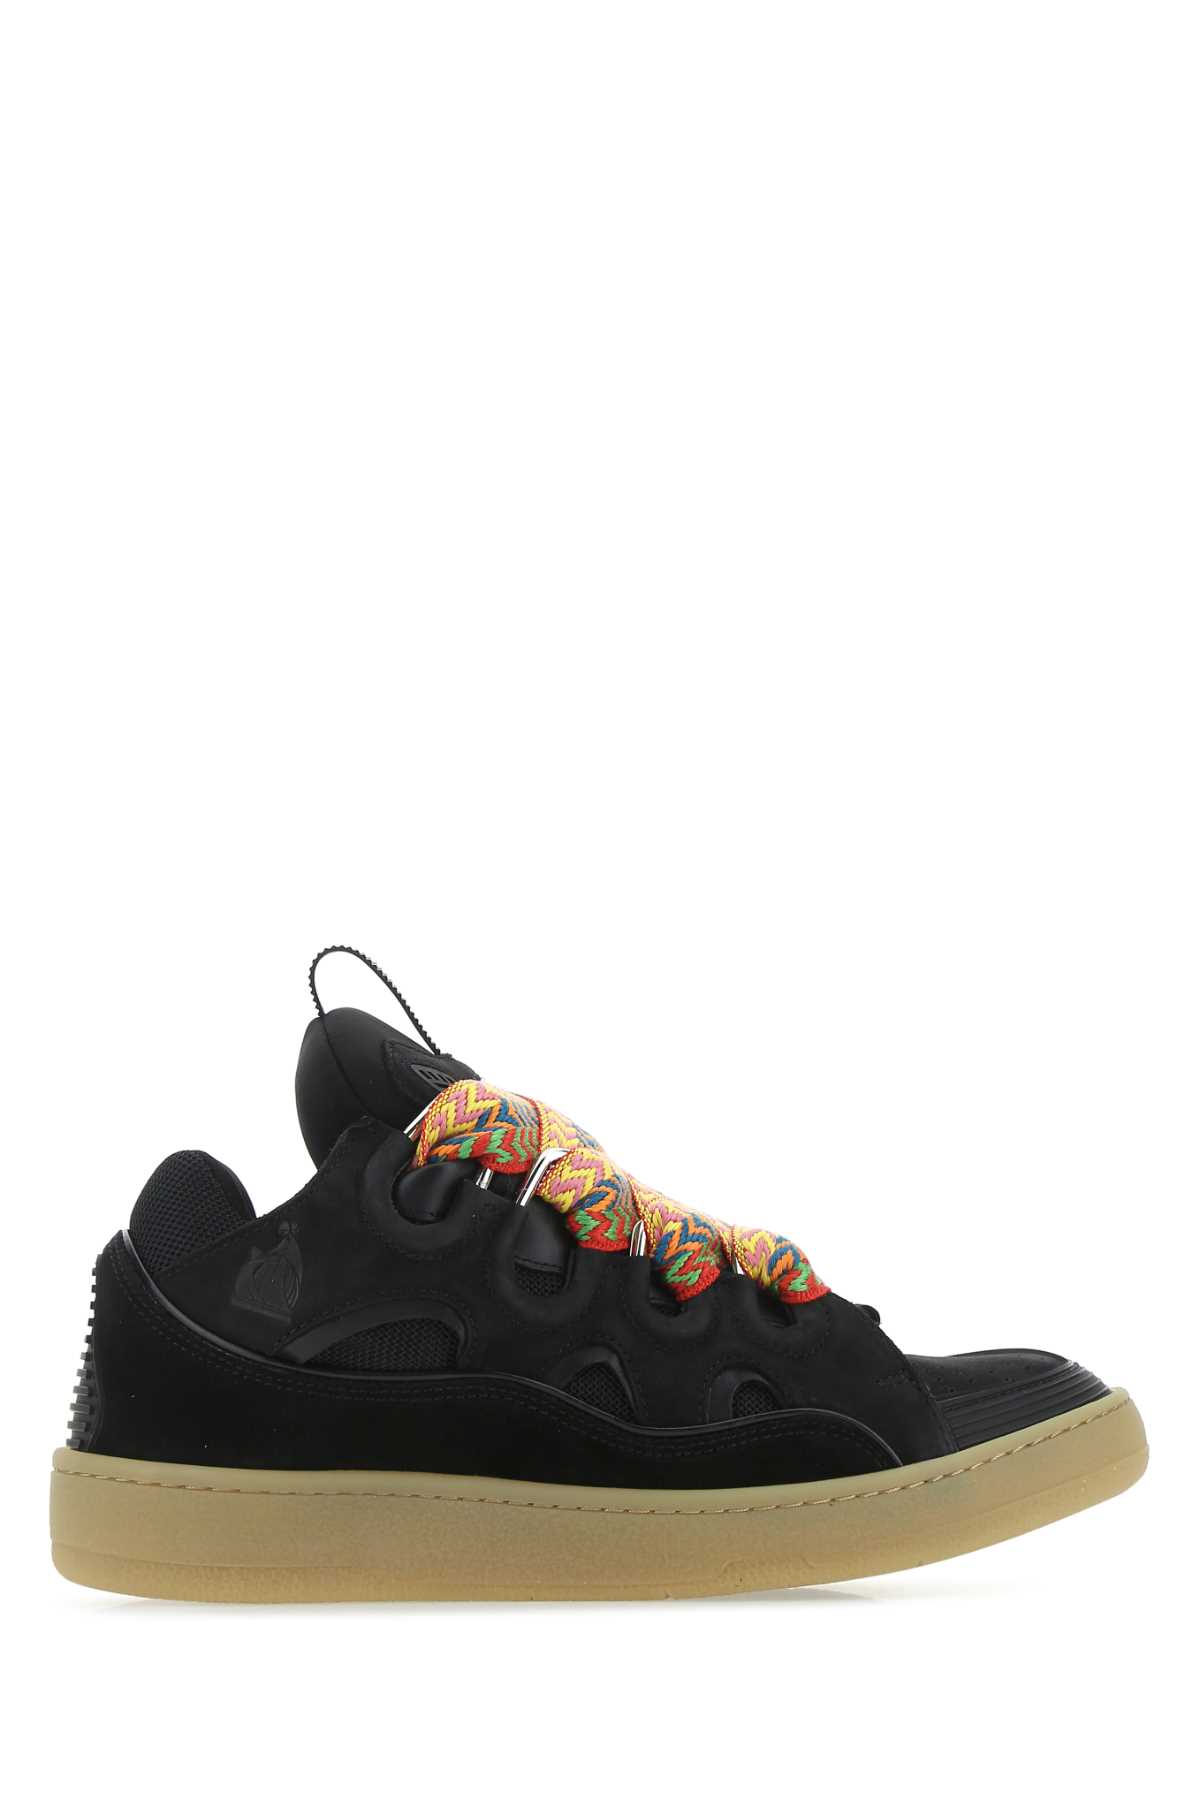 Shop Lanvin Black Curb Sneakers